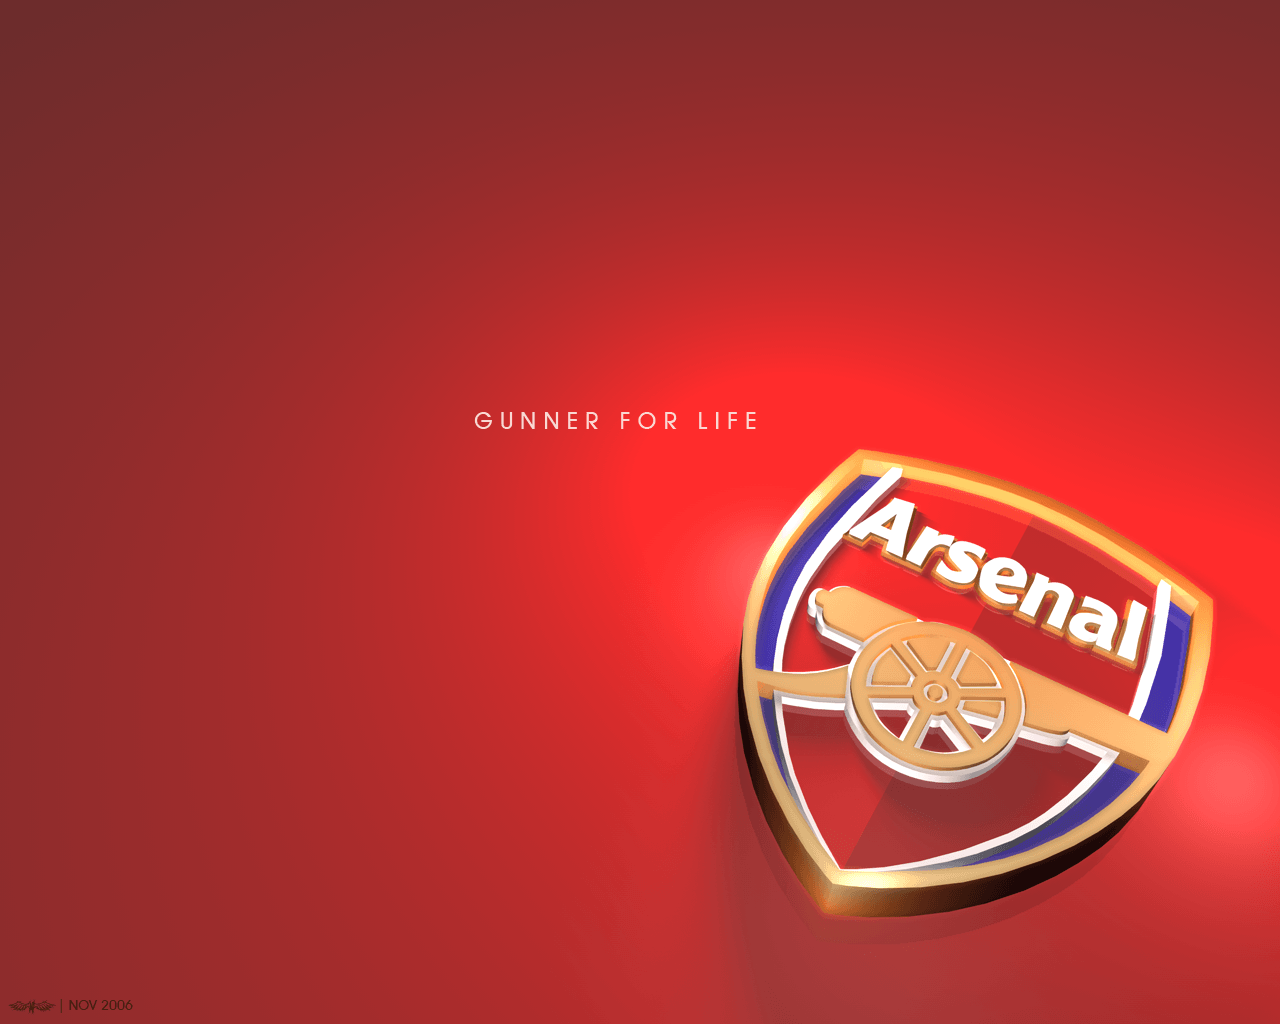 Arsenal Fc Wallpaper 2015